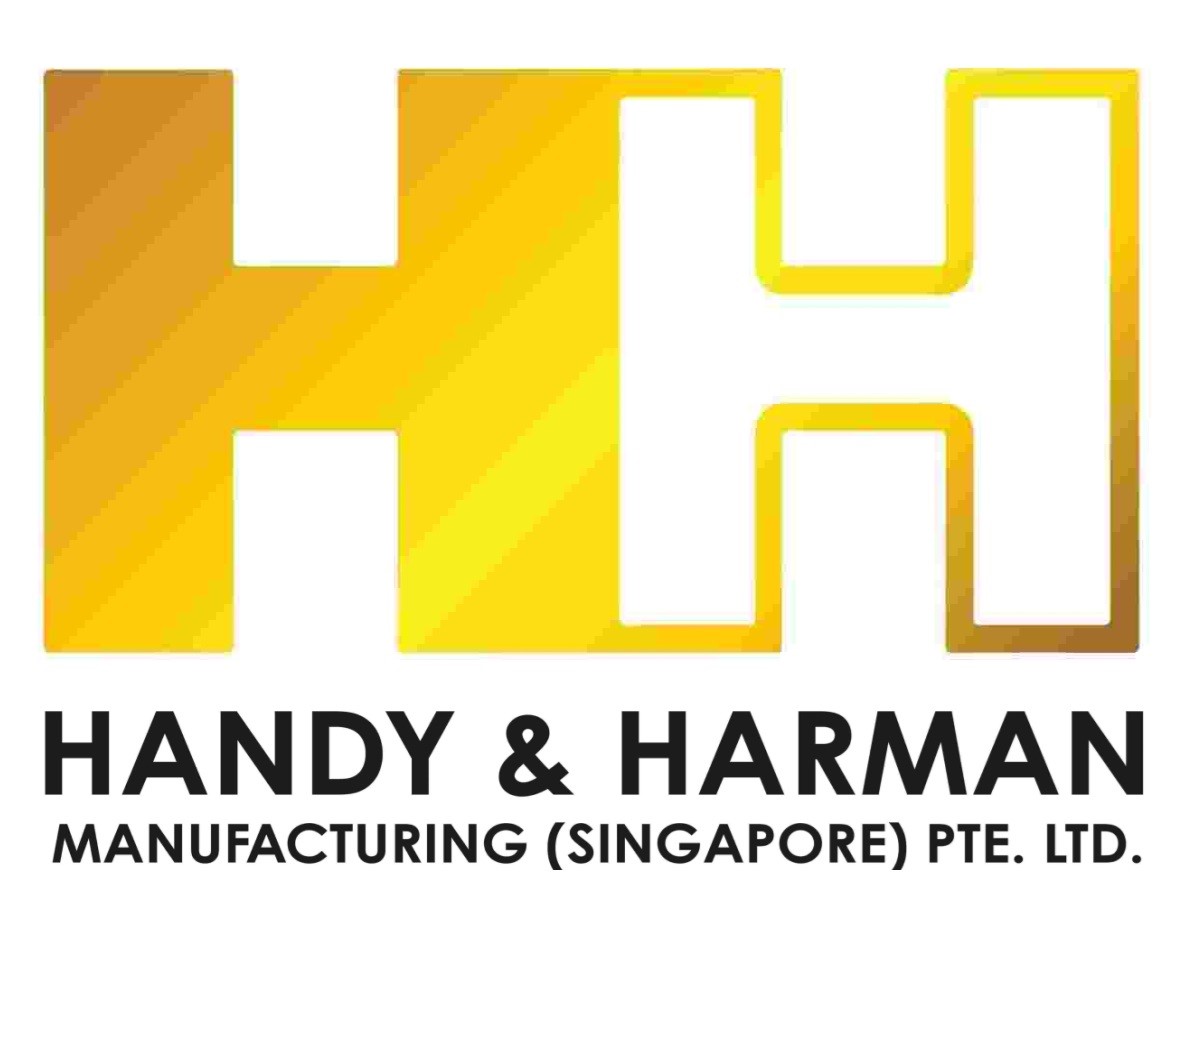 Handy & Harman Manufacturing (singapore) Pte. Ltd. company logo